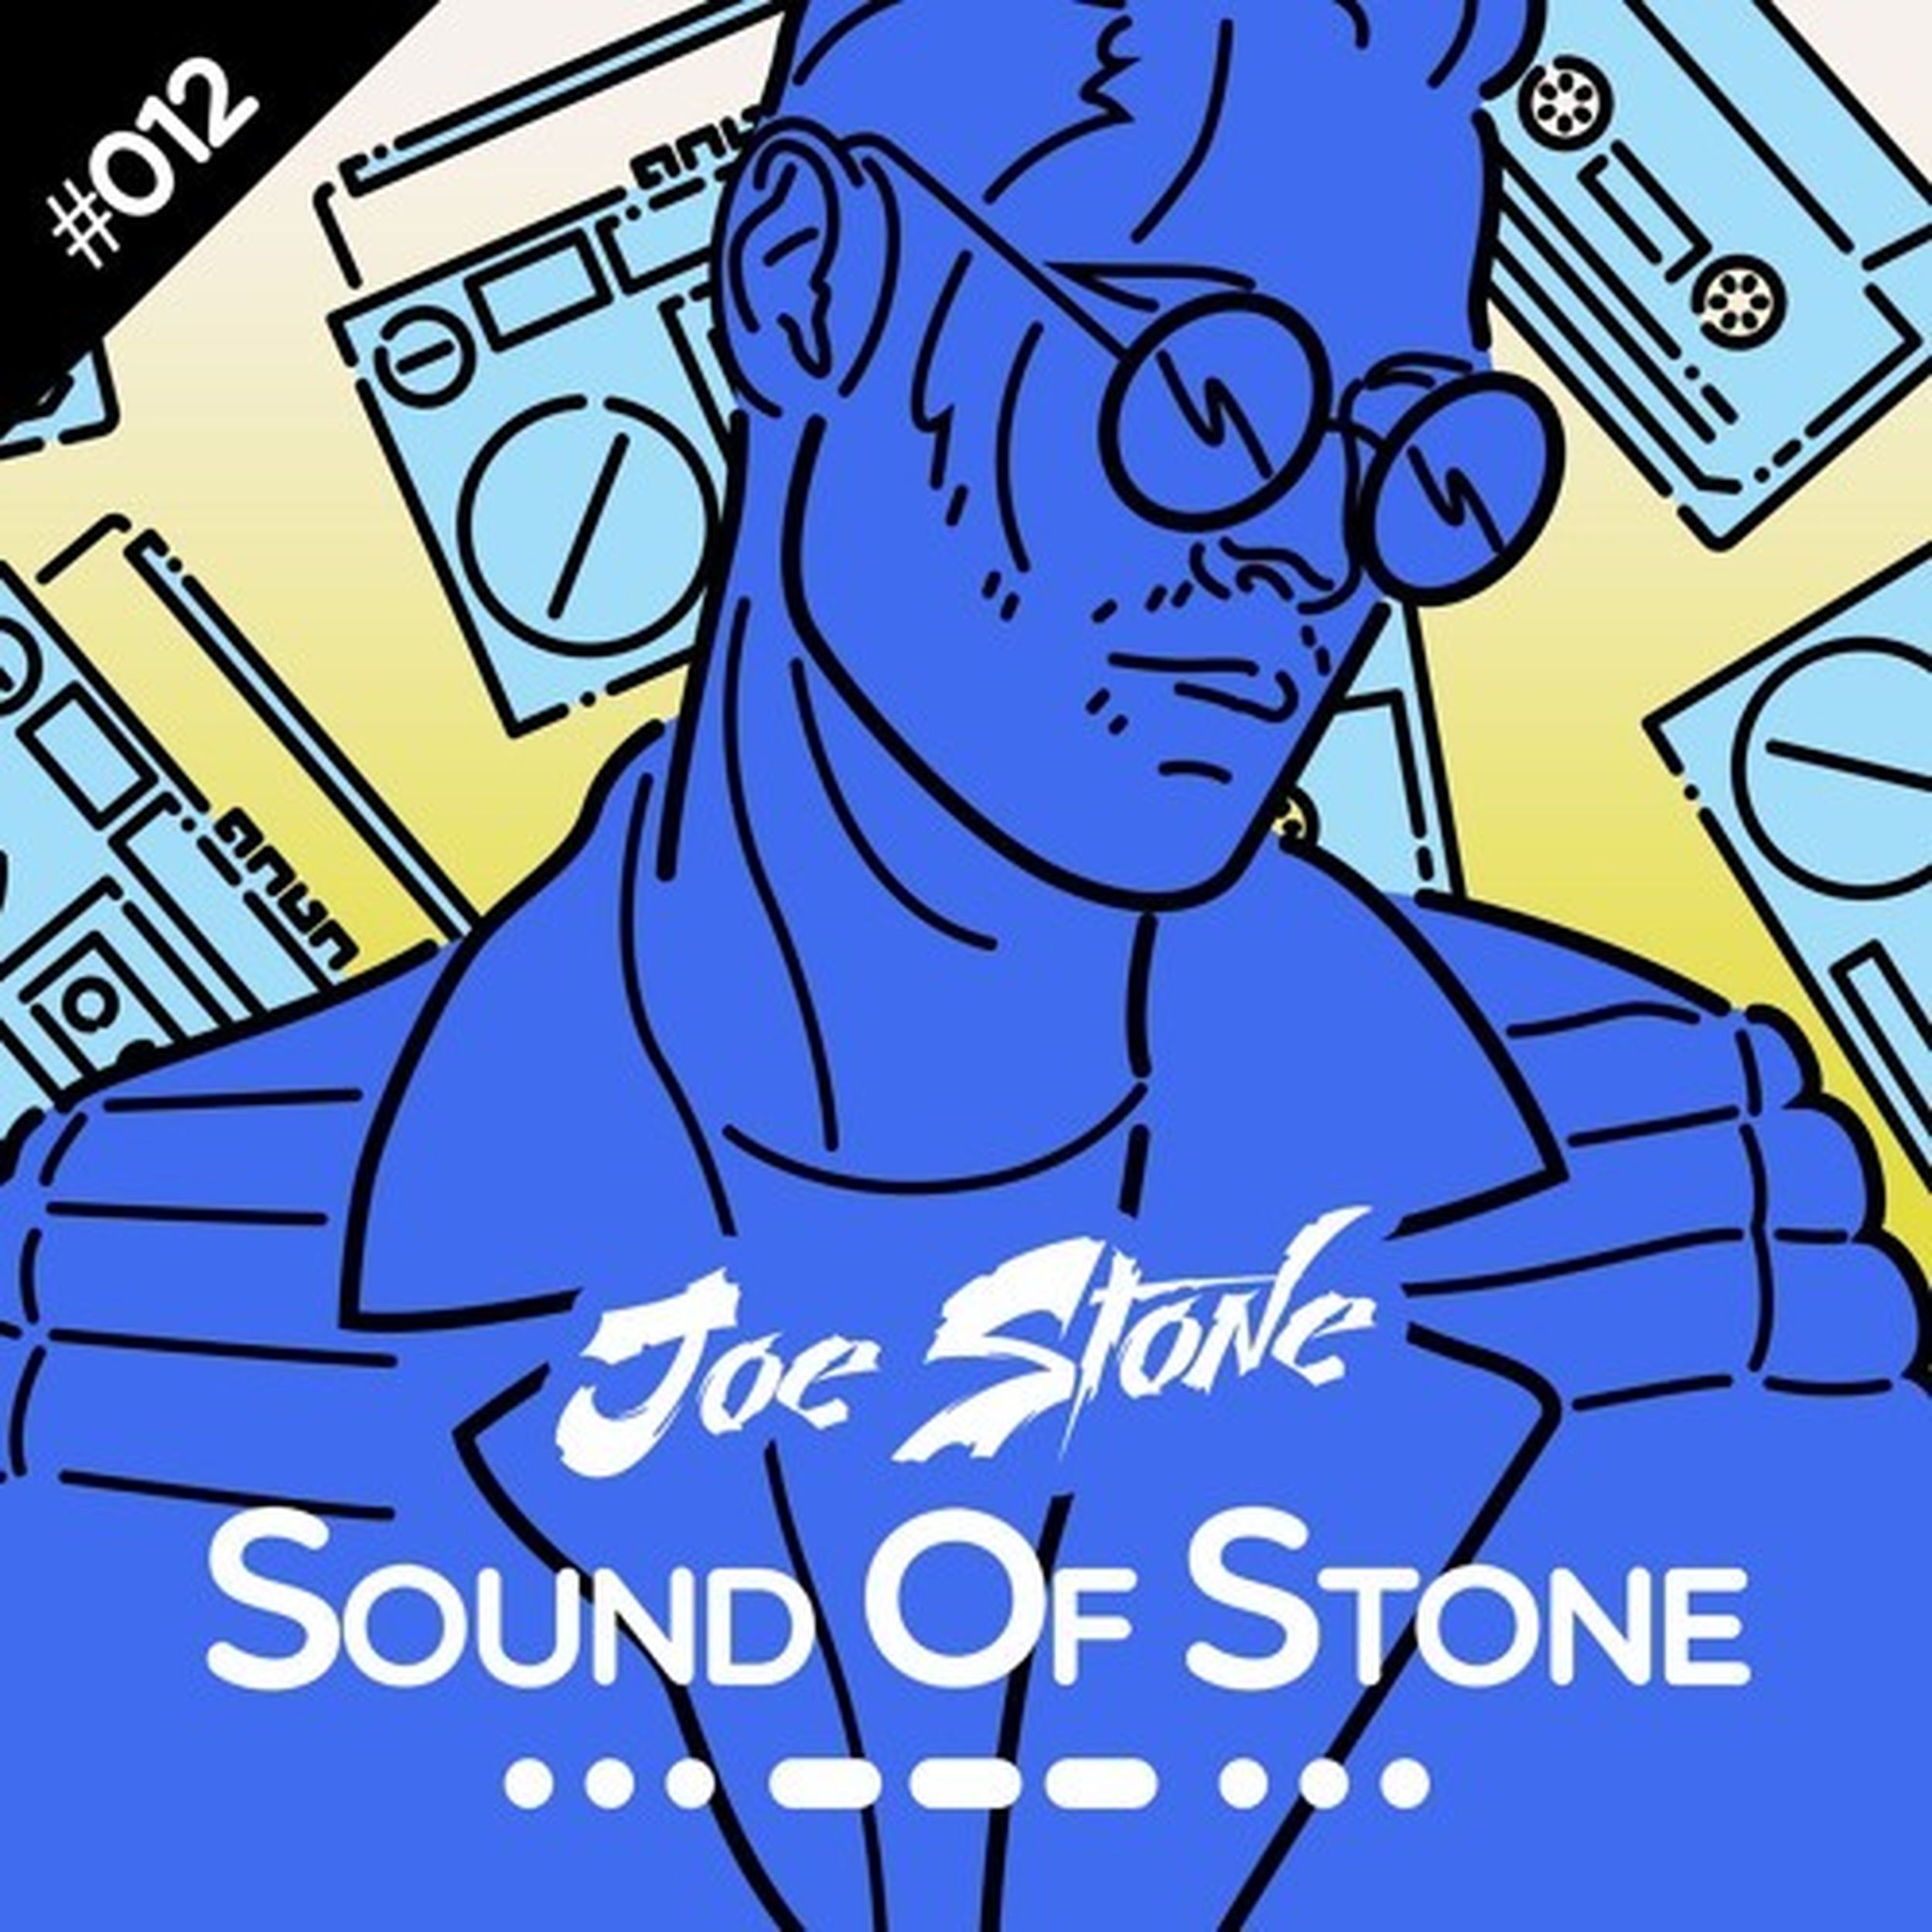 Joe stone